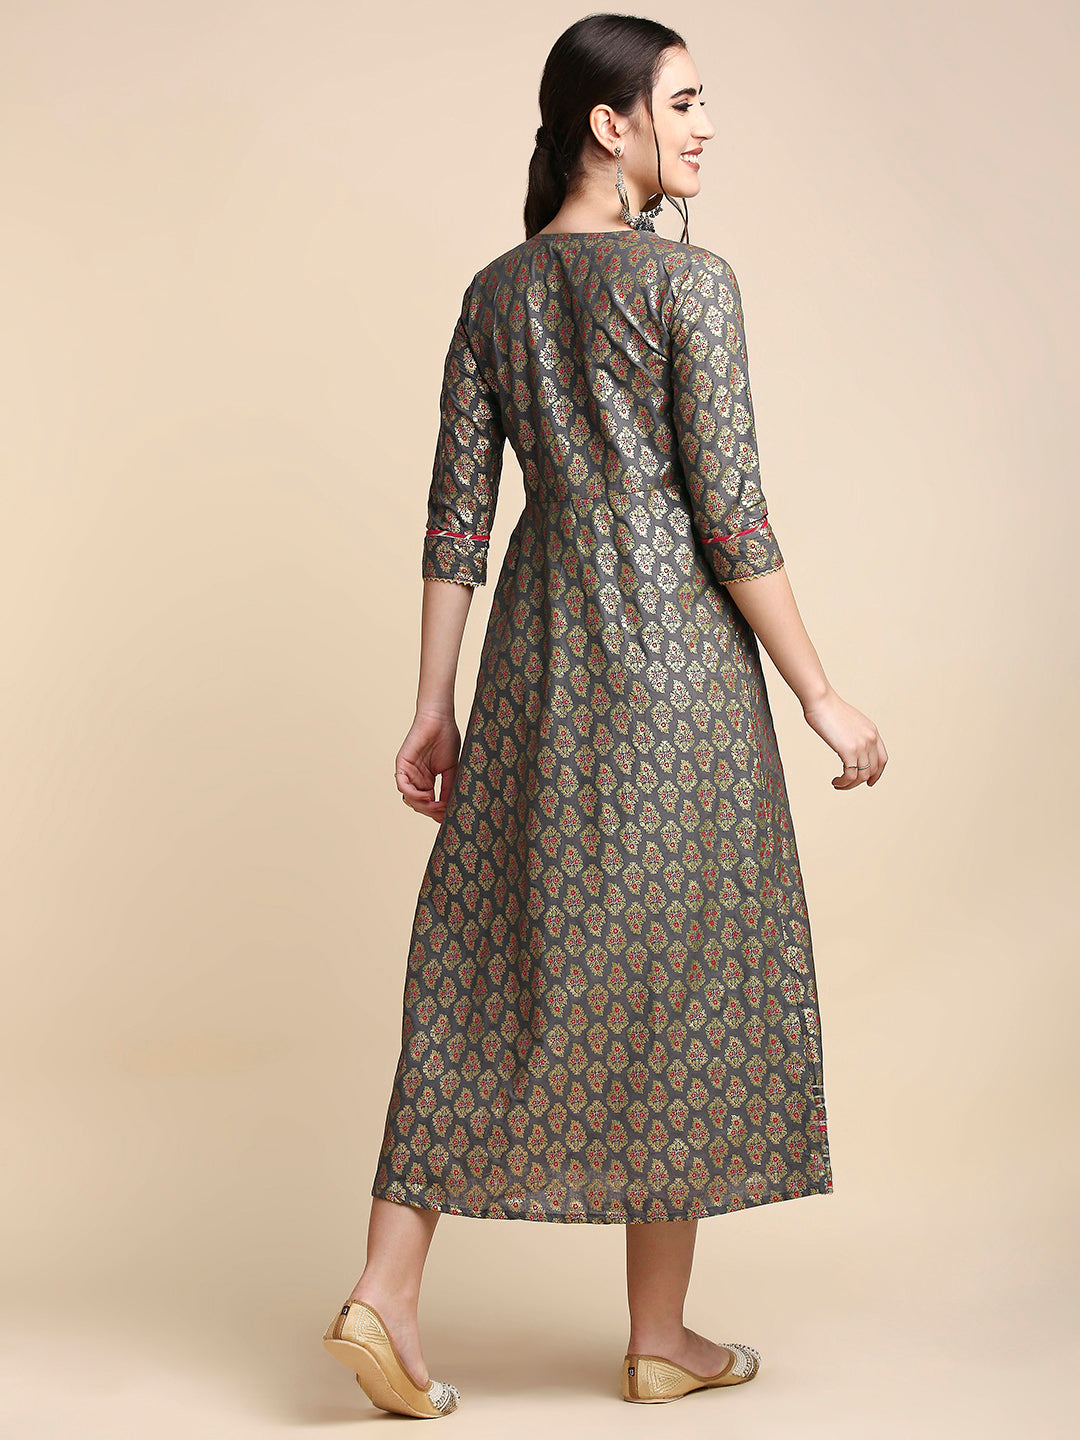 Women's's Grey Ethnic Motifs Ethnic A-Line Maxi Dress